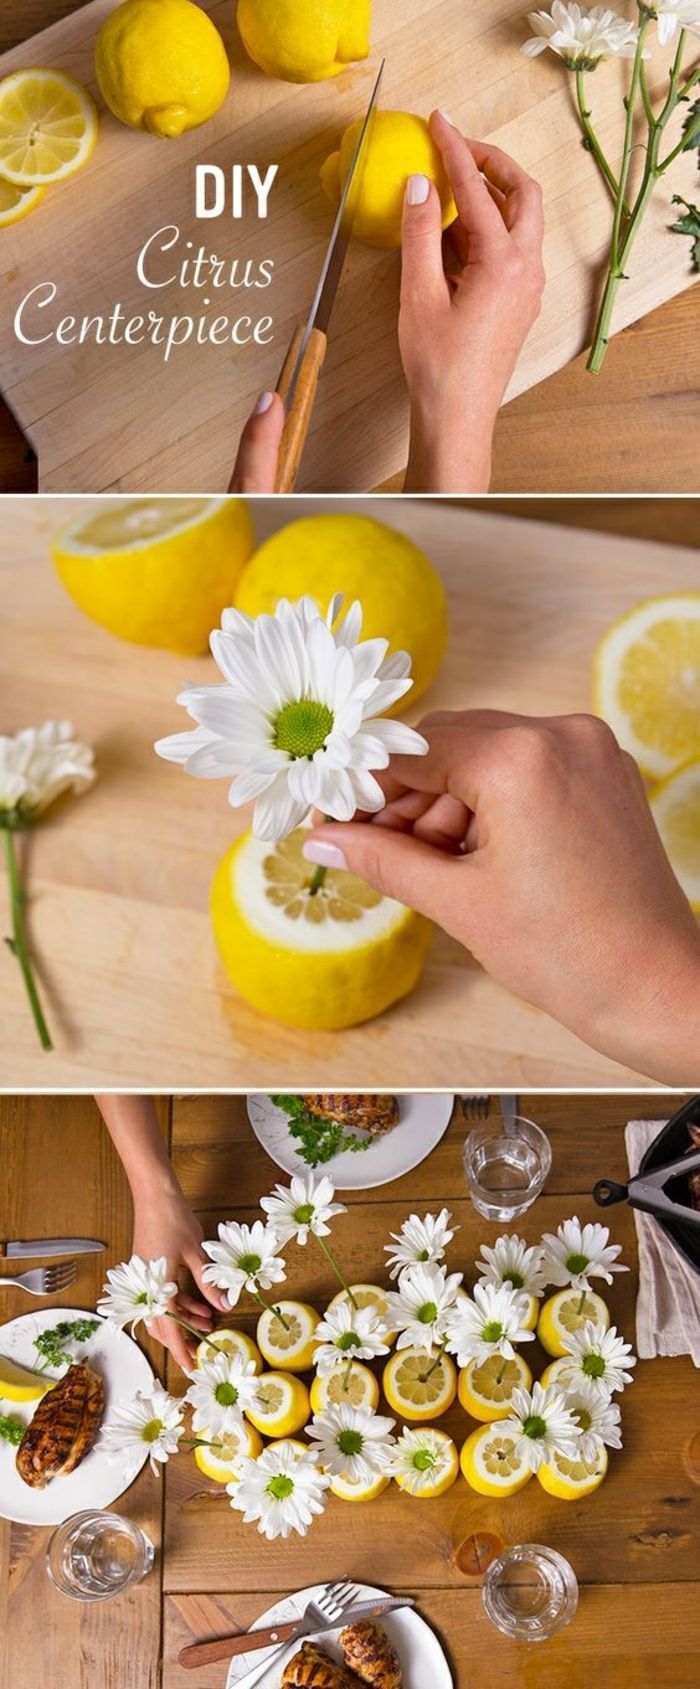 usa i limoni come vasi, fiori bianchi, decorazioni da tavola